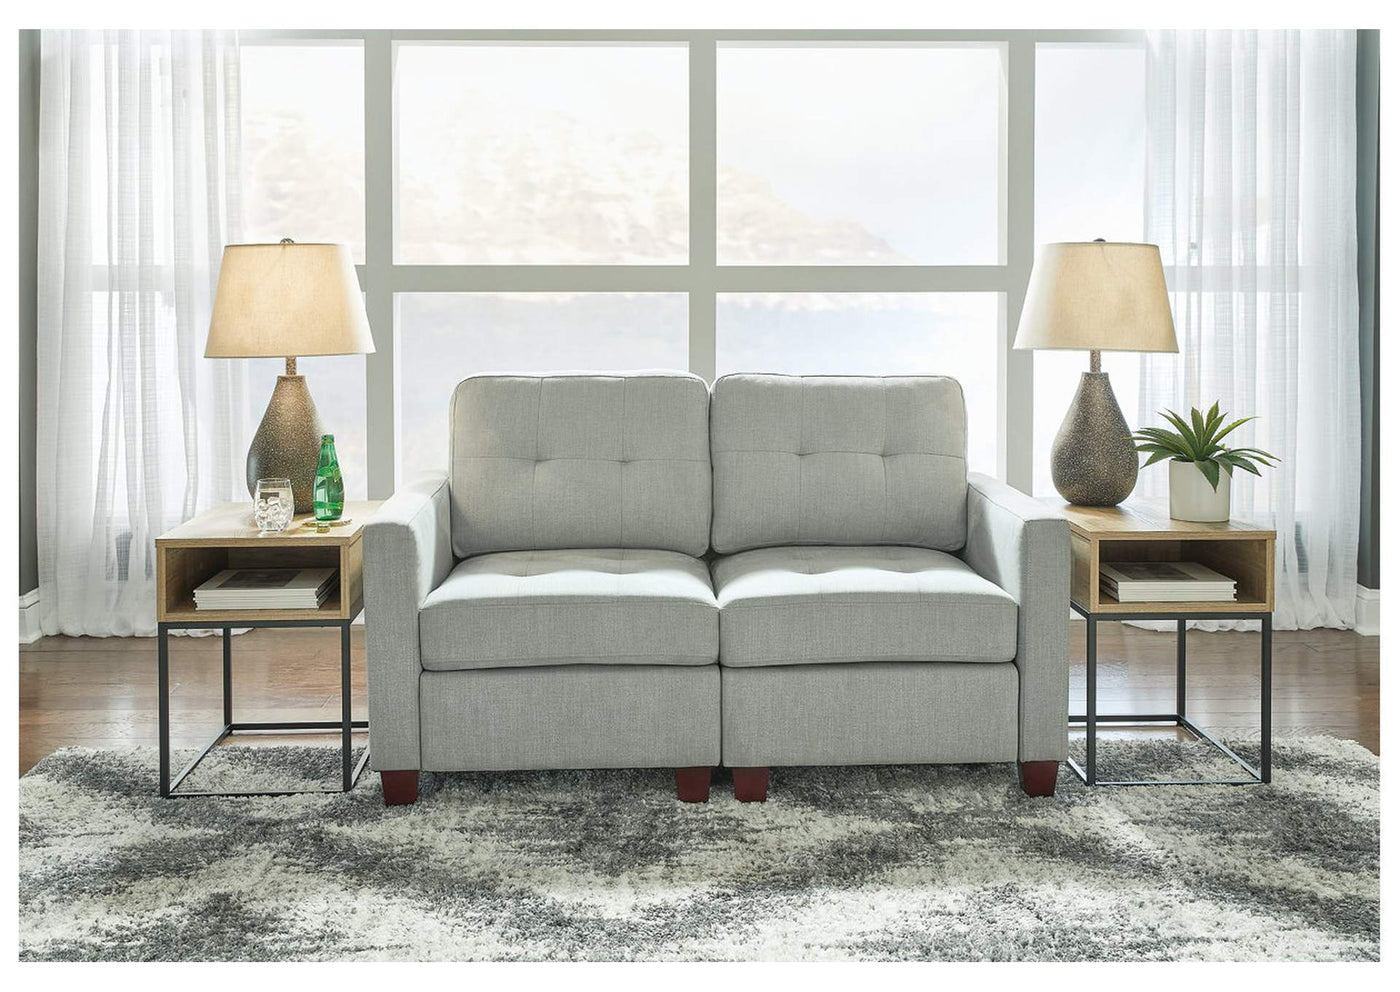 Edlie Sectional Sofa-Sectional Sofas-Jennifer Furniture